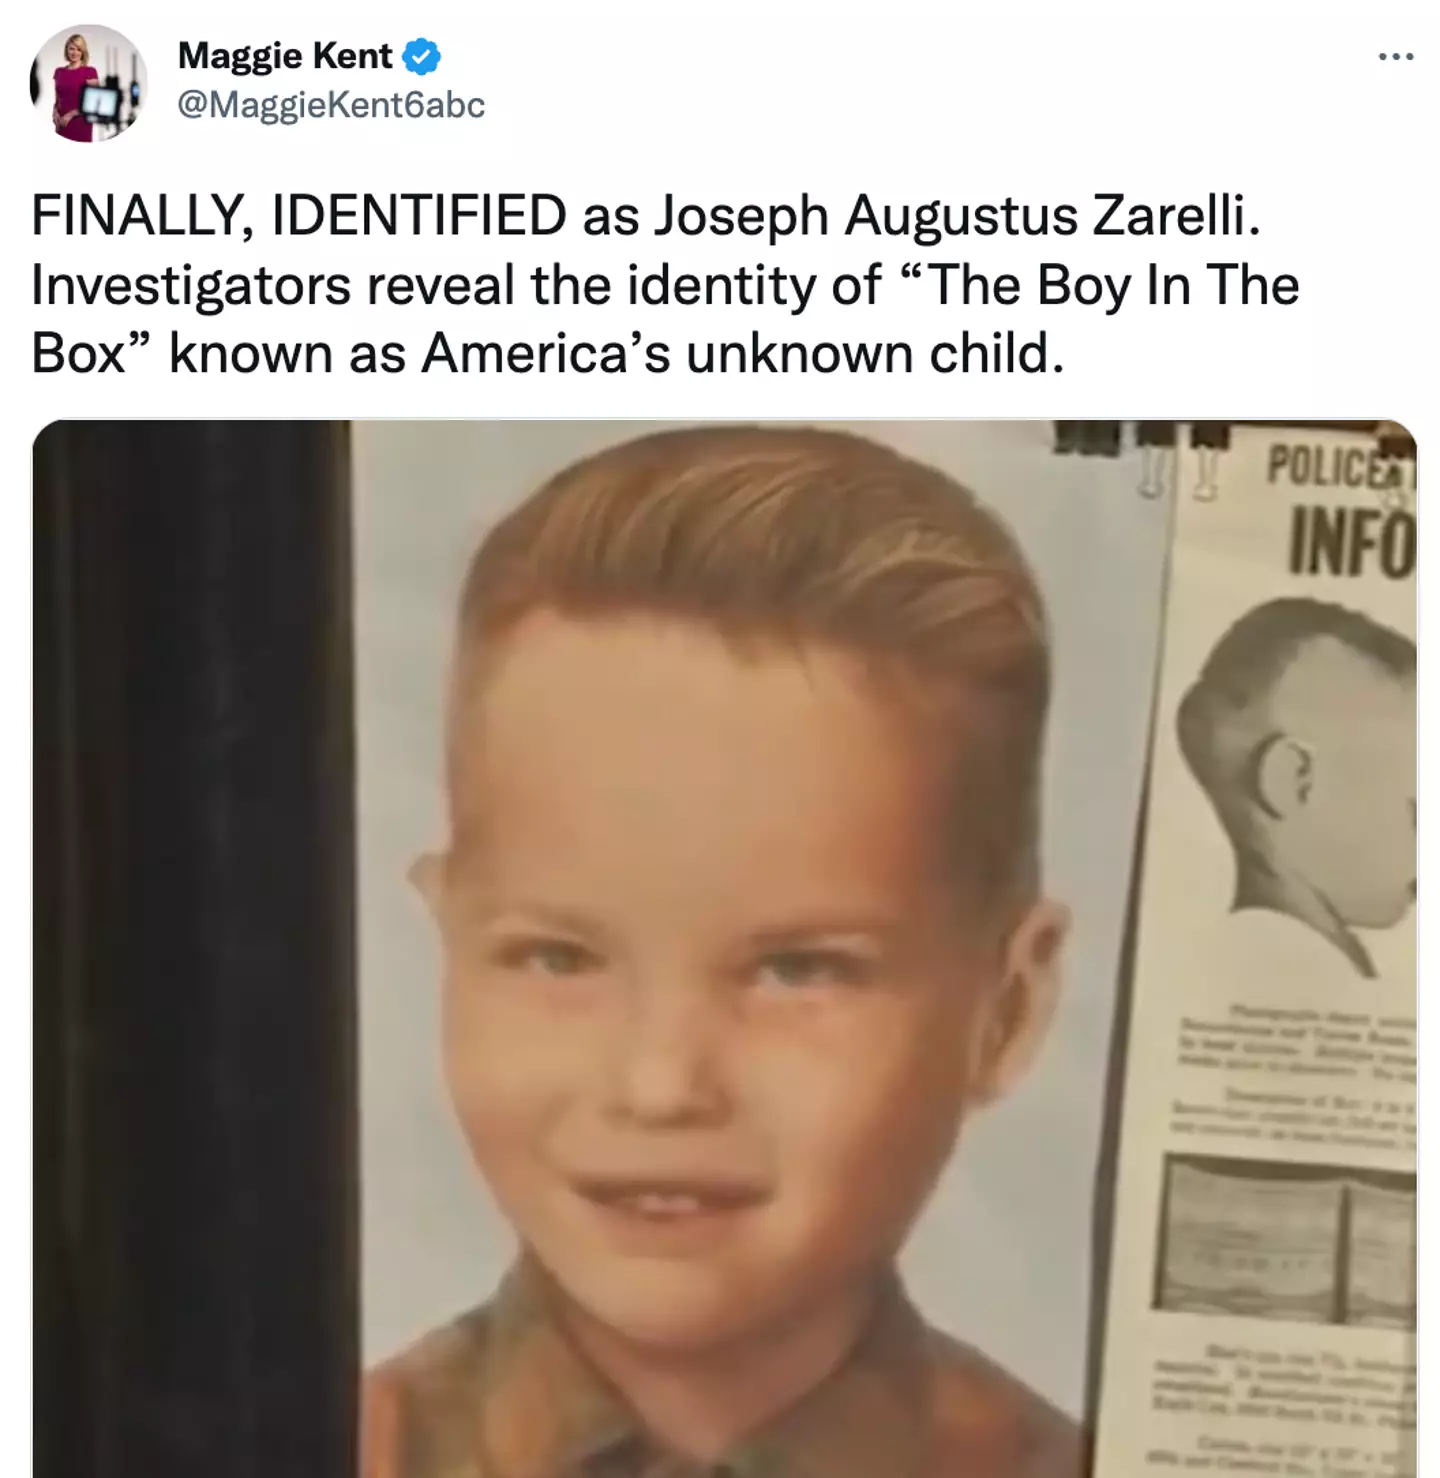 Authorities named the child as Joseph Augustus Zarelli.